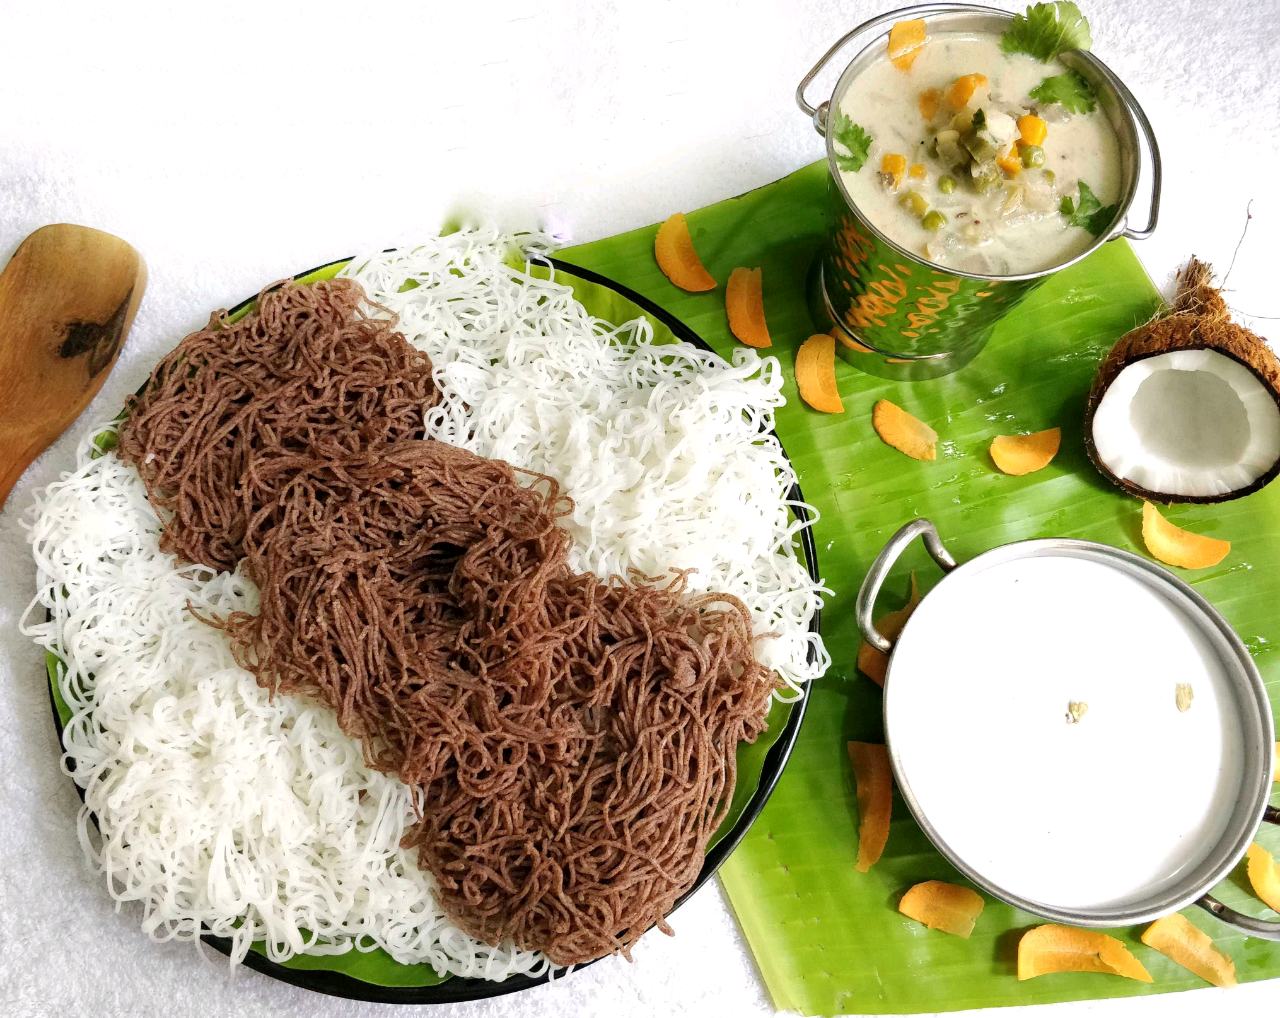 Raagi,Rice String hopper's,Sodhi and Coconut Milk